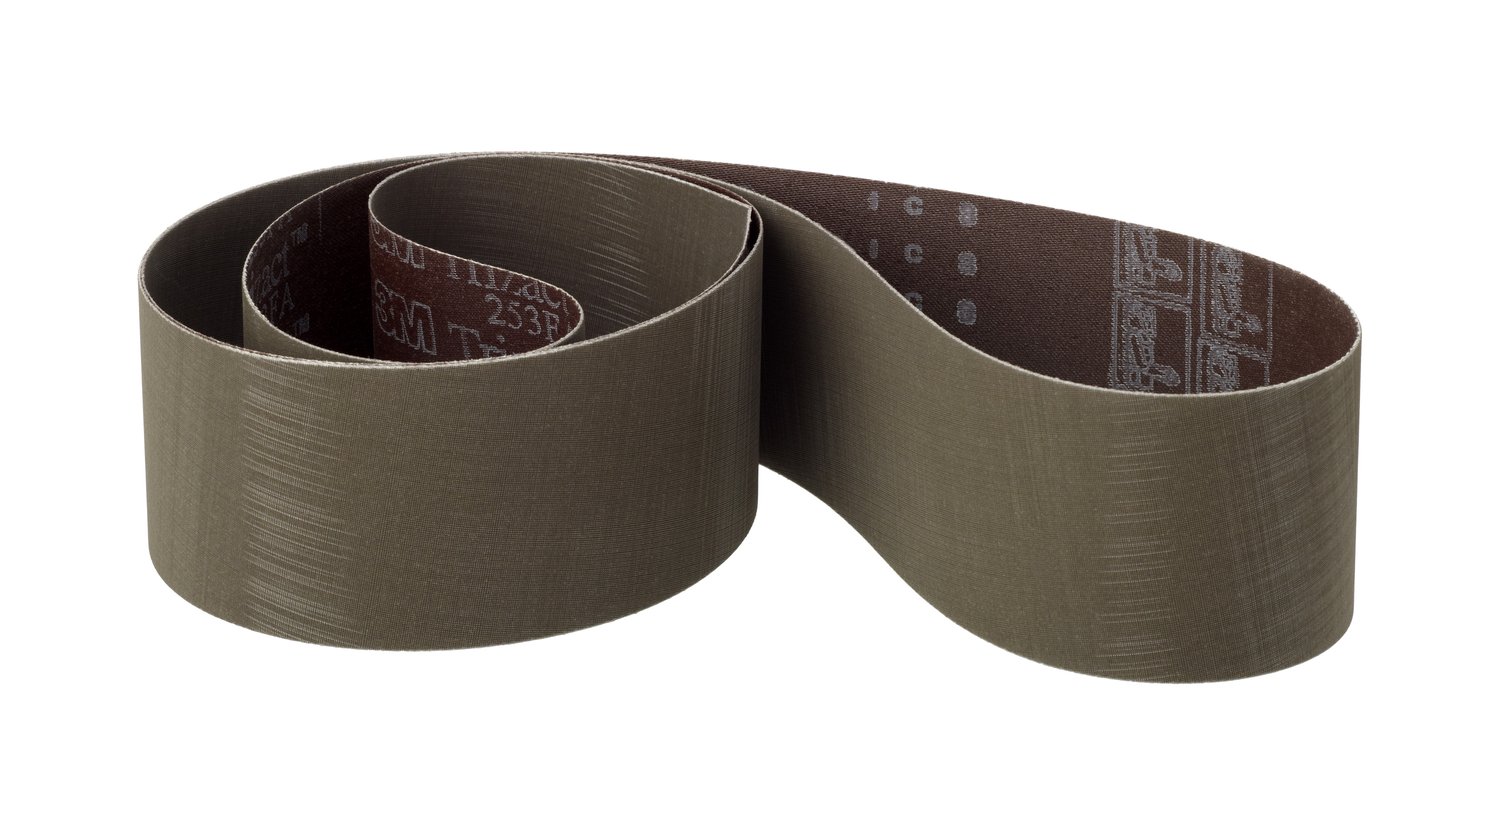 7010517199 - 3M Trizact Cloth Belt 253FA, A30 XF-weight, 6 in x 132 in, Film-lok,
Full-flex